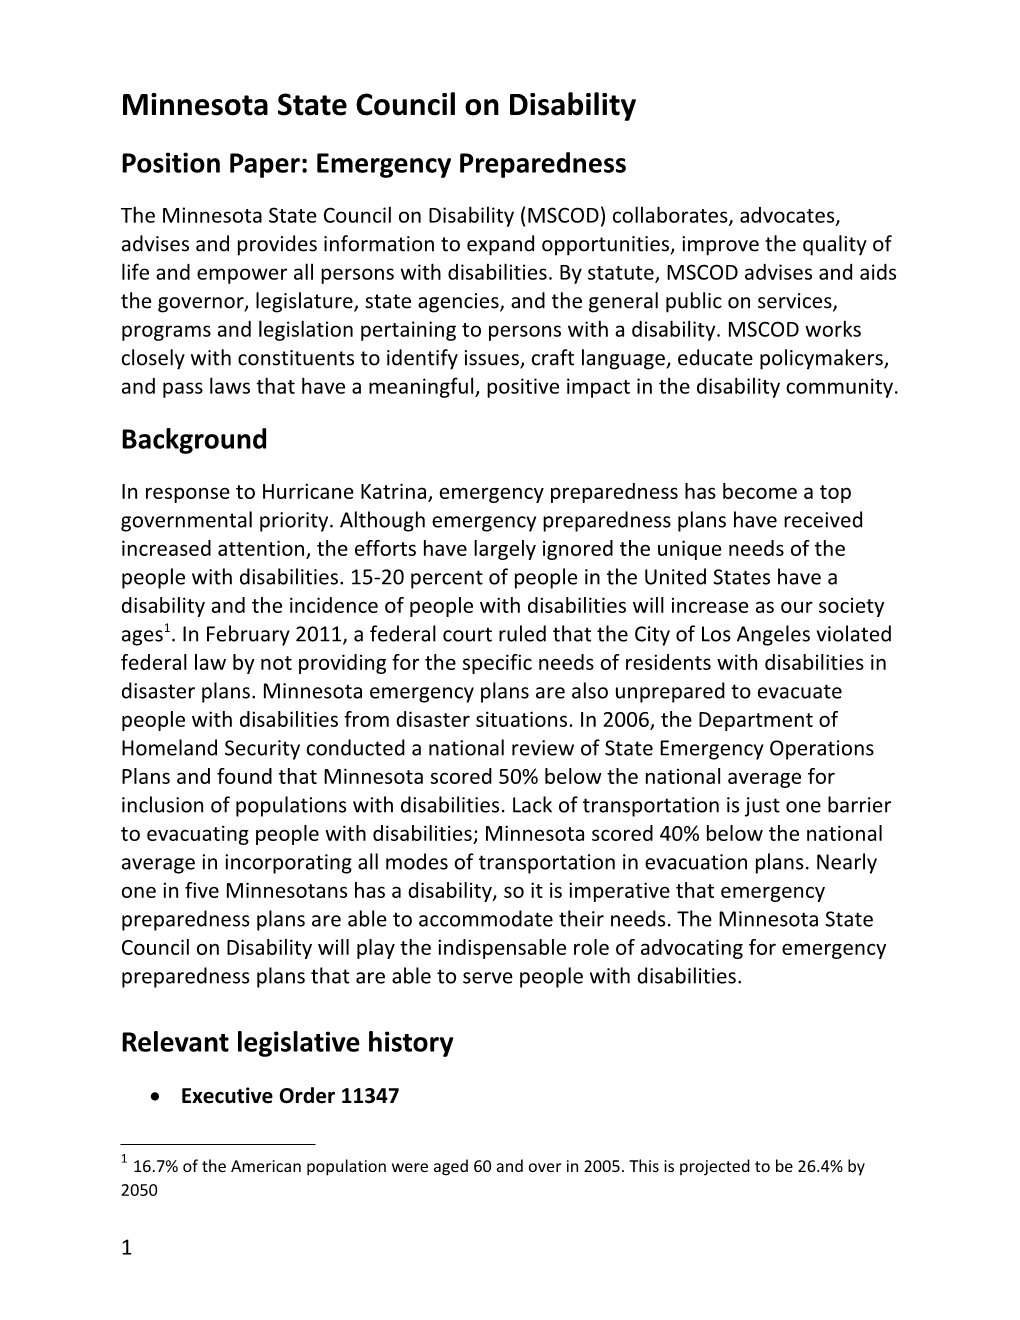 Position Paper: Emergency Preparedness - Mar. 20, 2010